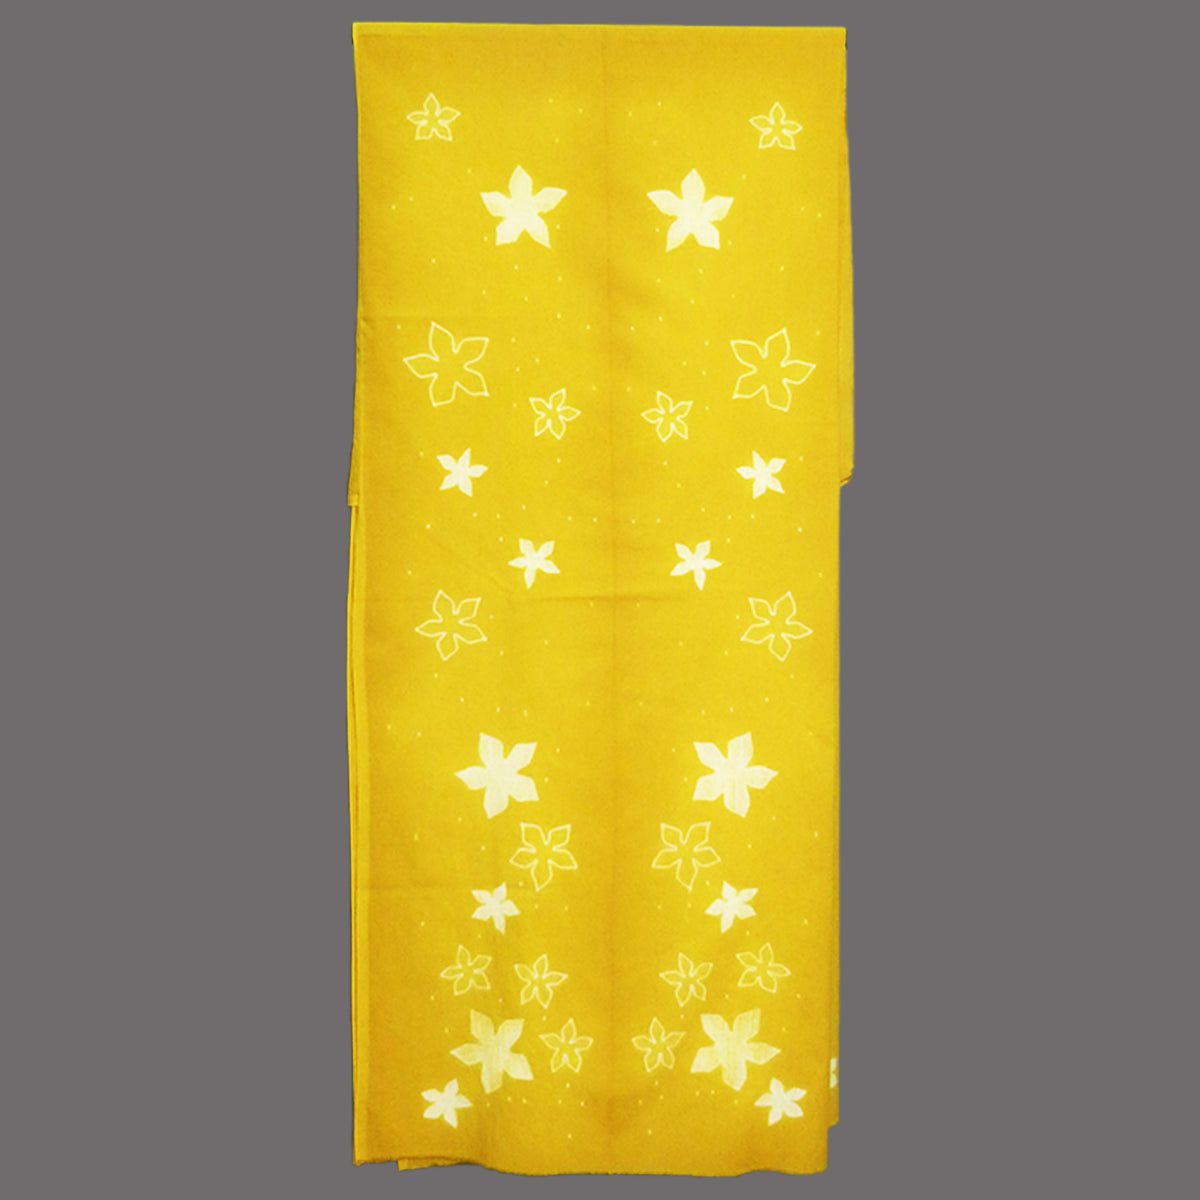 5 petal flowers design cambric shibori fabric in a heart warming yellow shade - 2